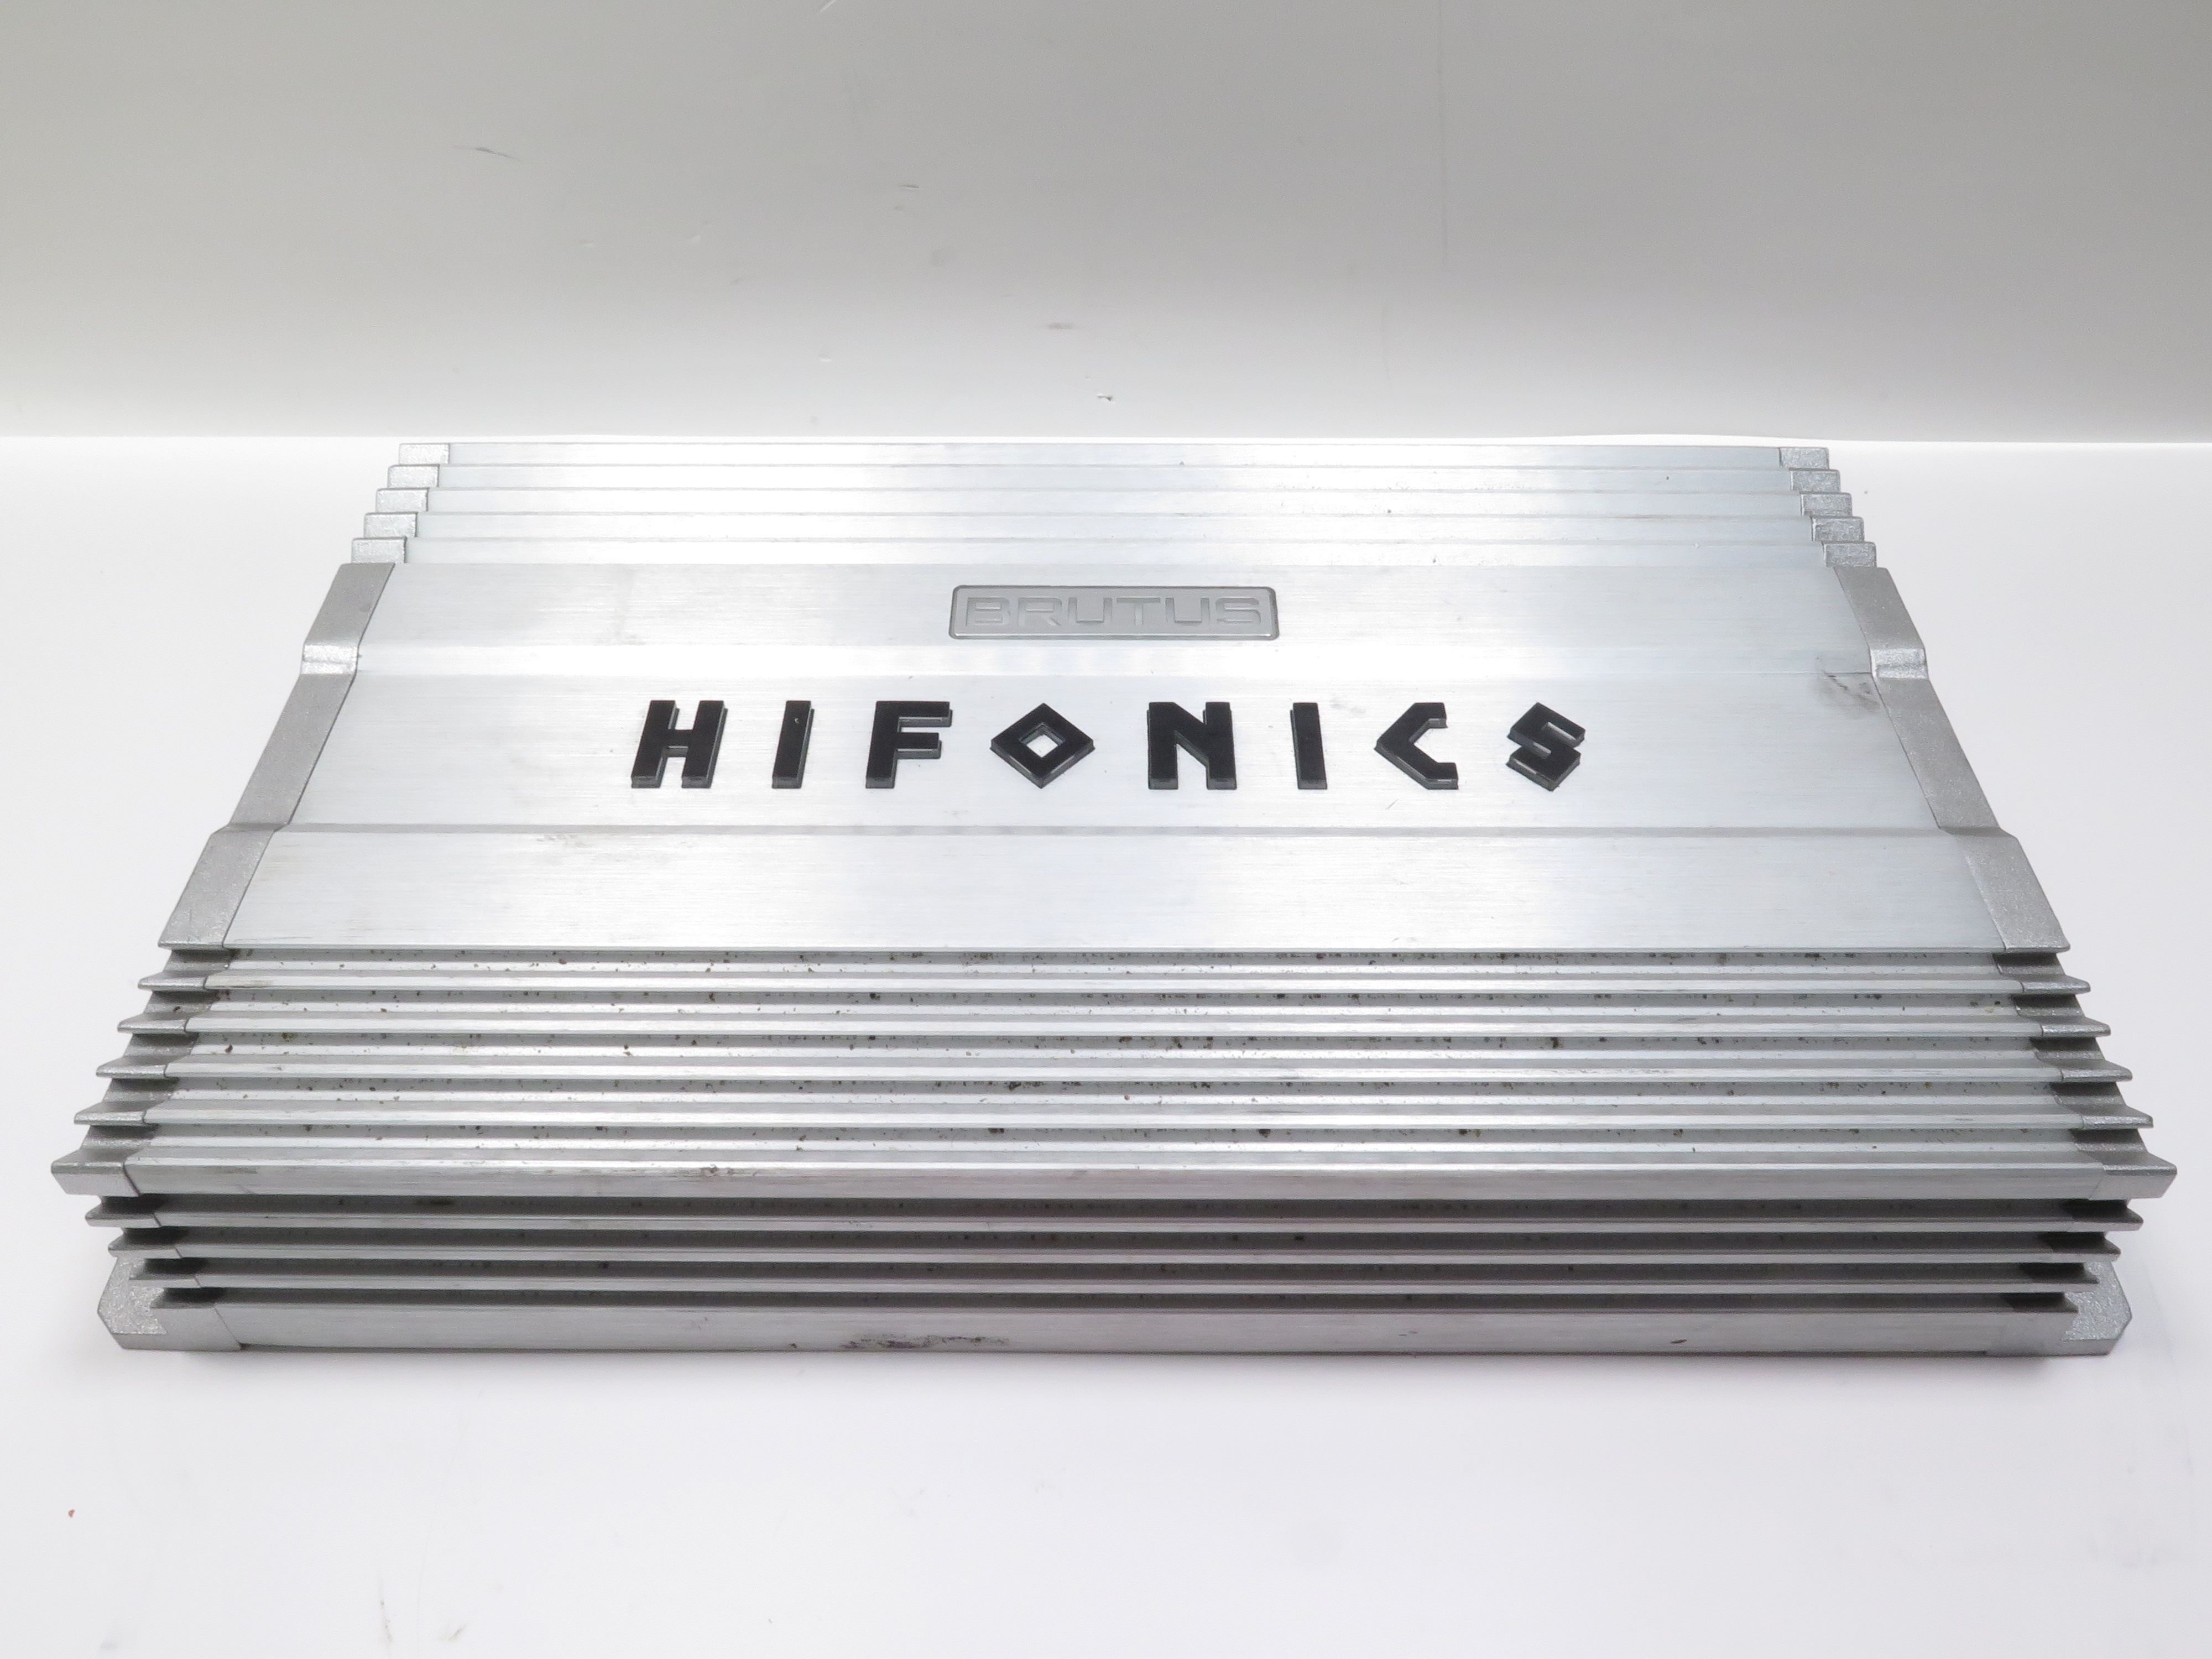 HiFonics Brutus Gamma BG-2200.1D 2200W Car Amplifier 5978